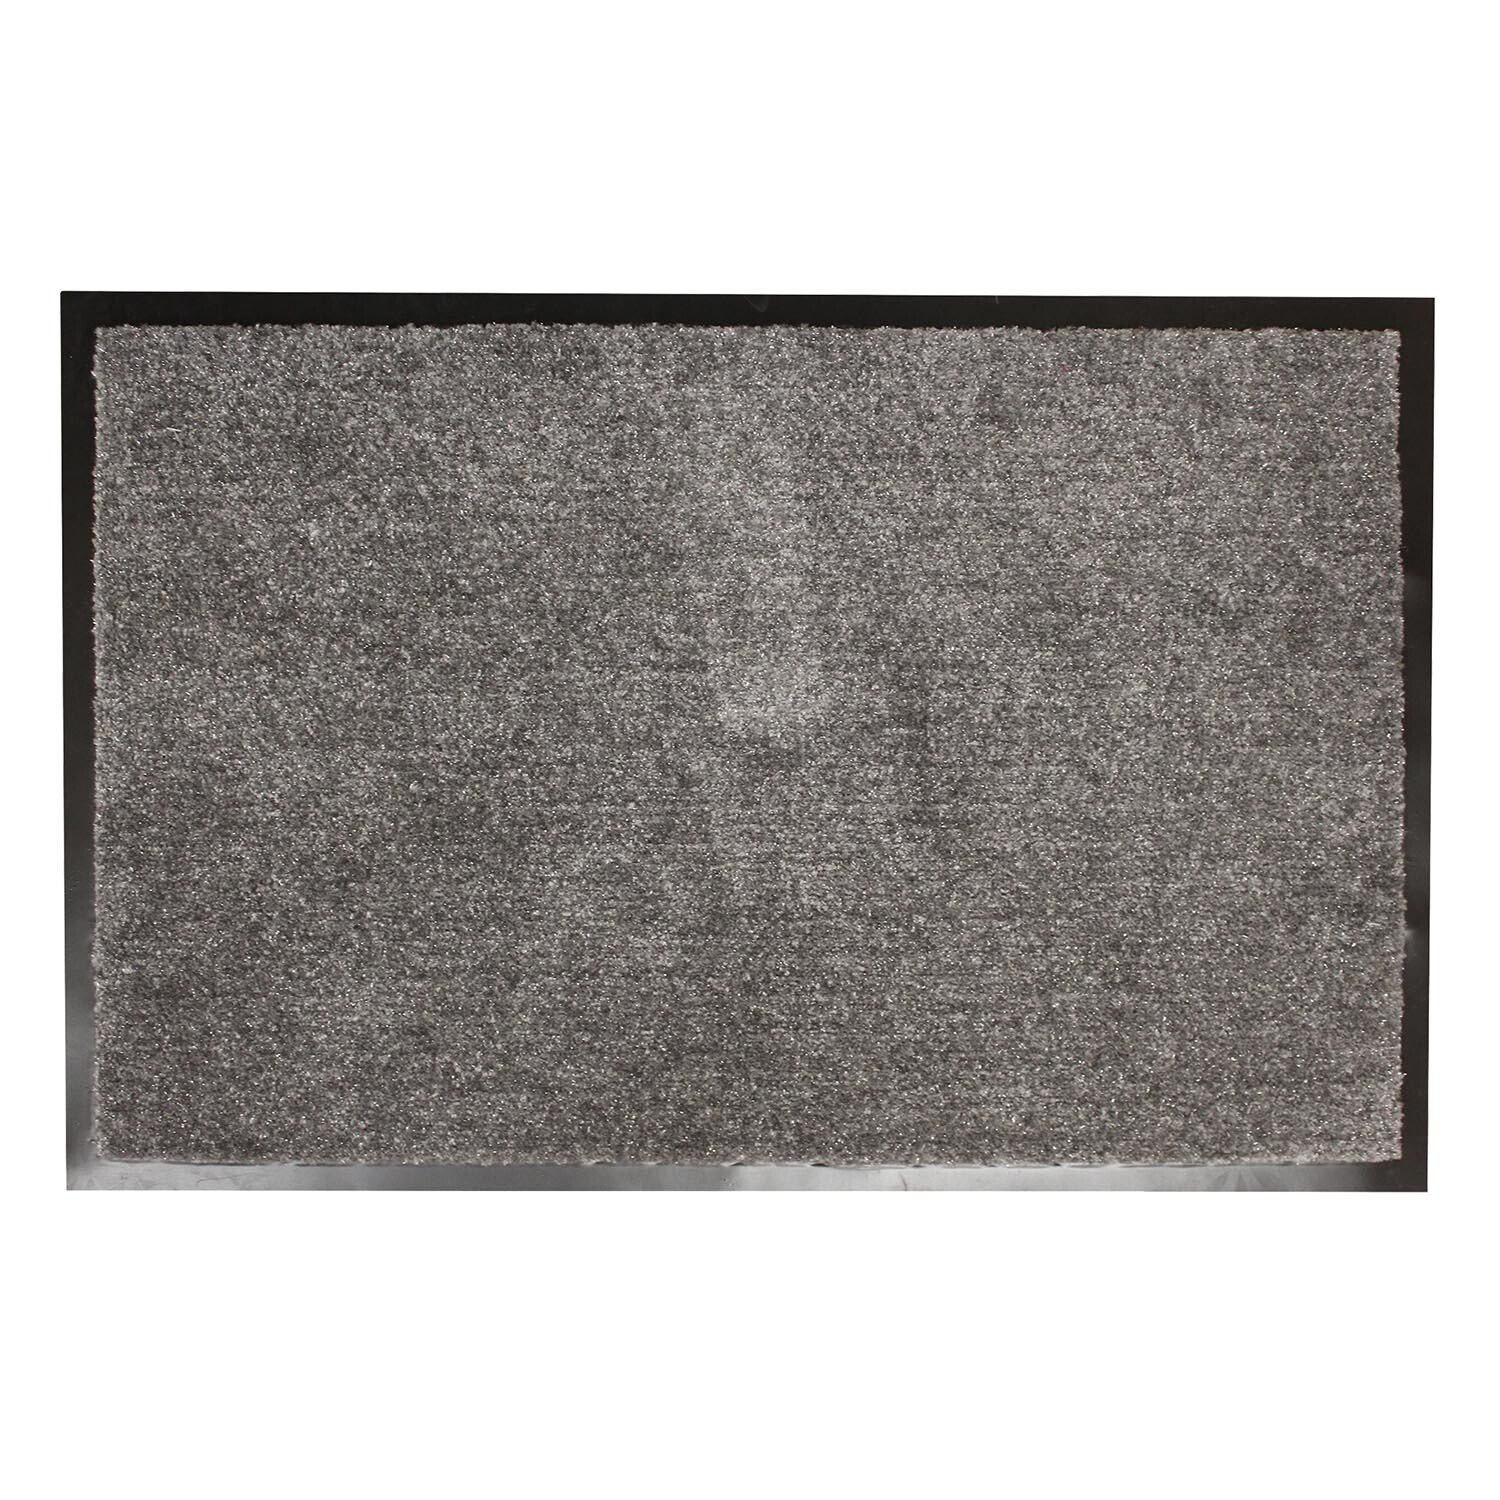 Single Mud Master PVC Doormat 60 x 40cm in Assorted styles Image 1